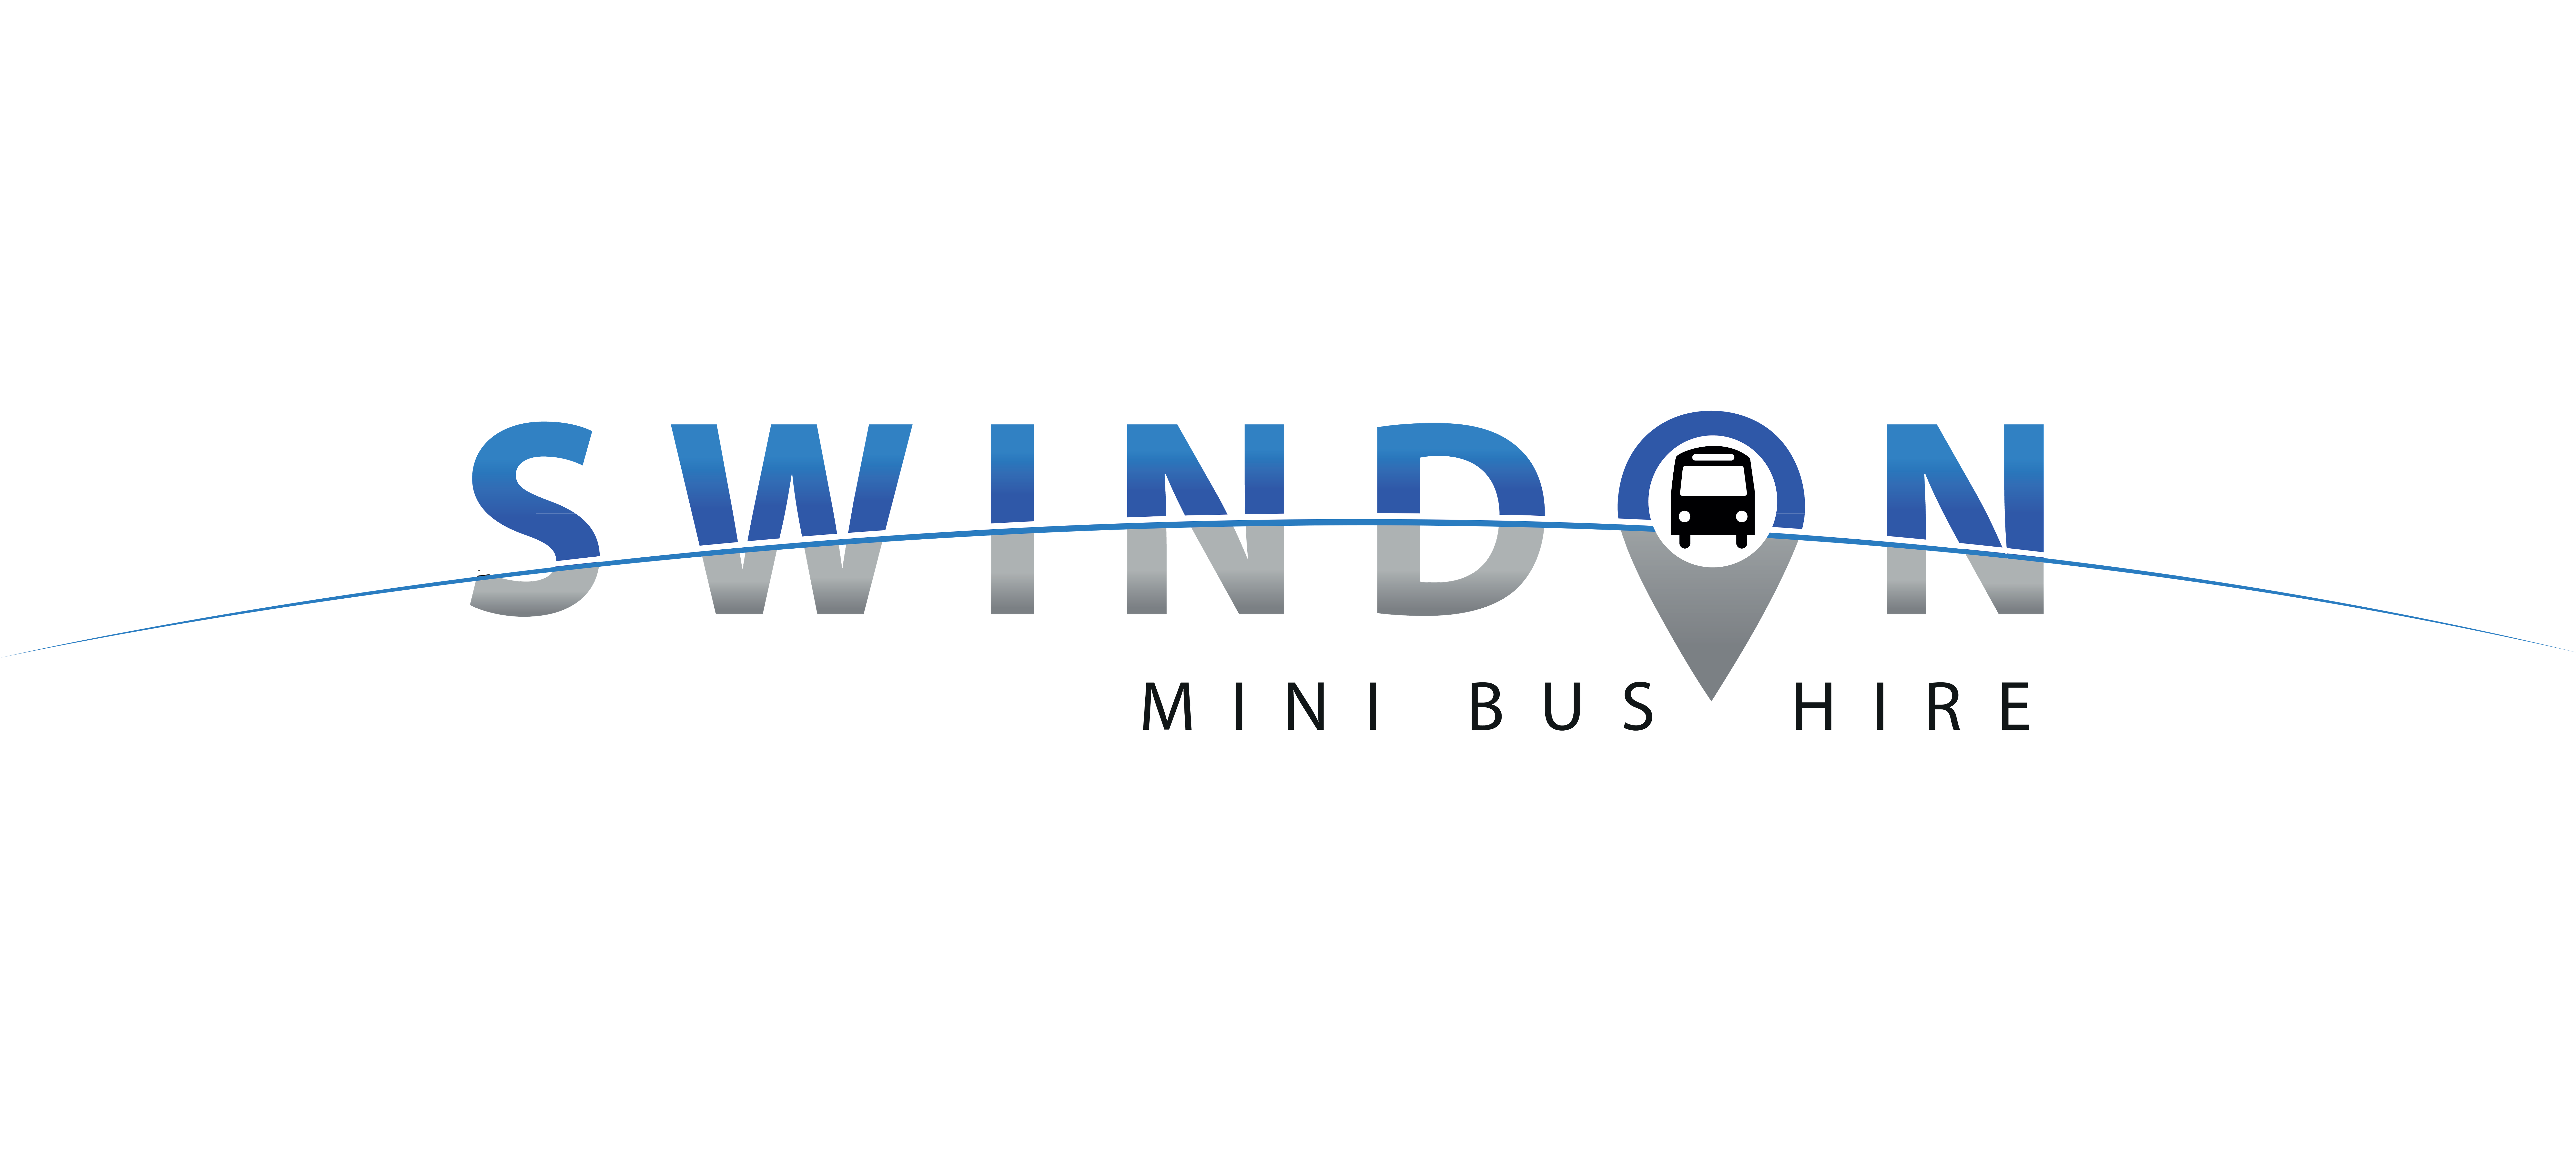 Swindon Minibus